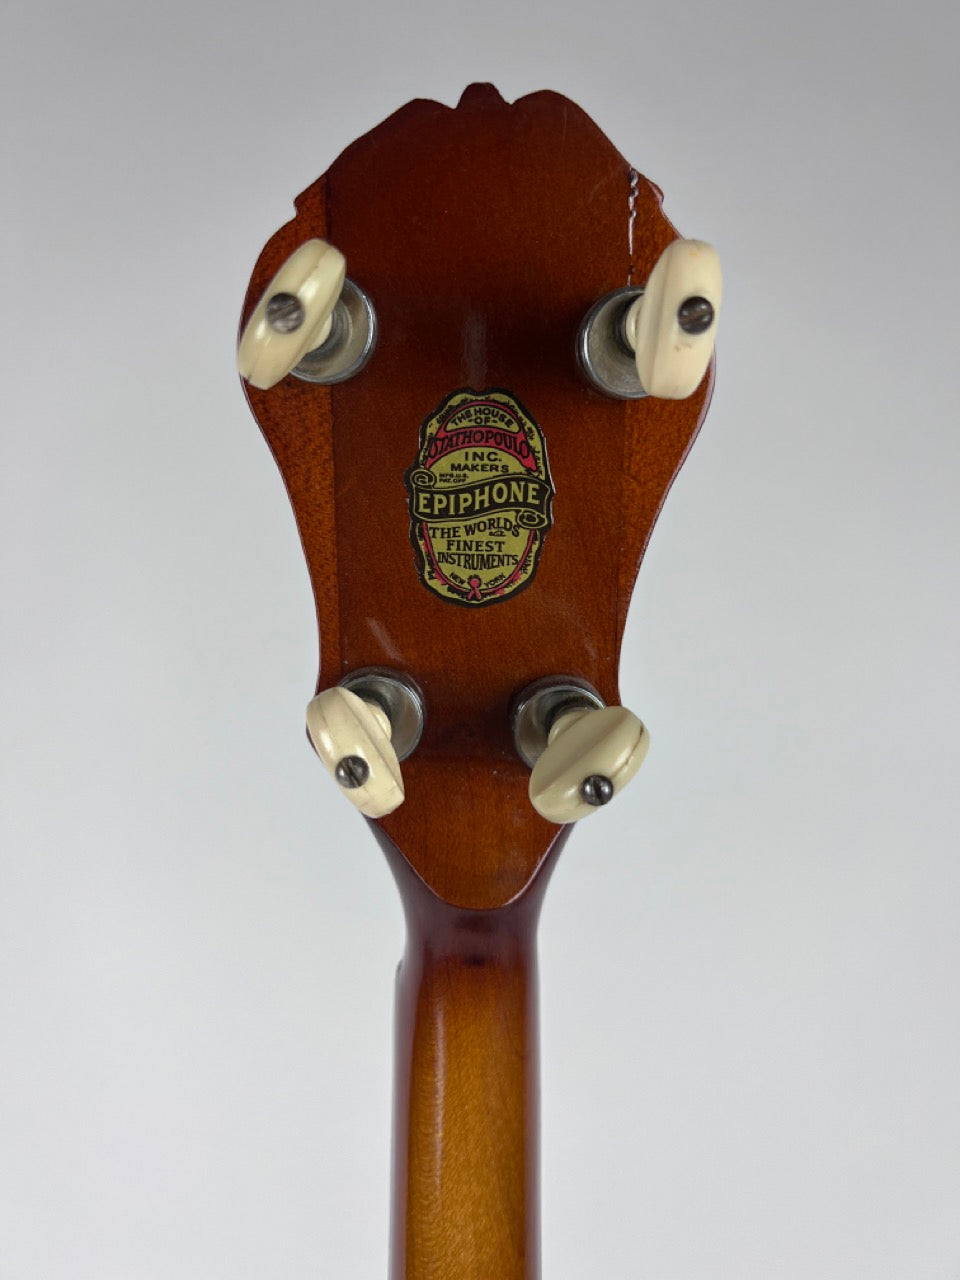 Epiphone 12 inch Conversion Banjo c. 1923